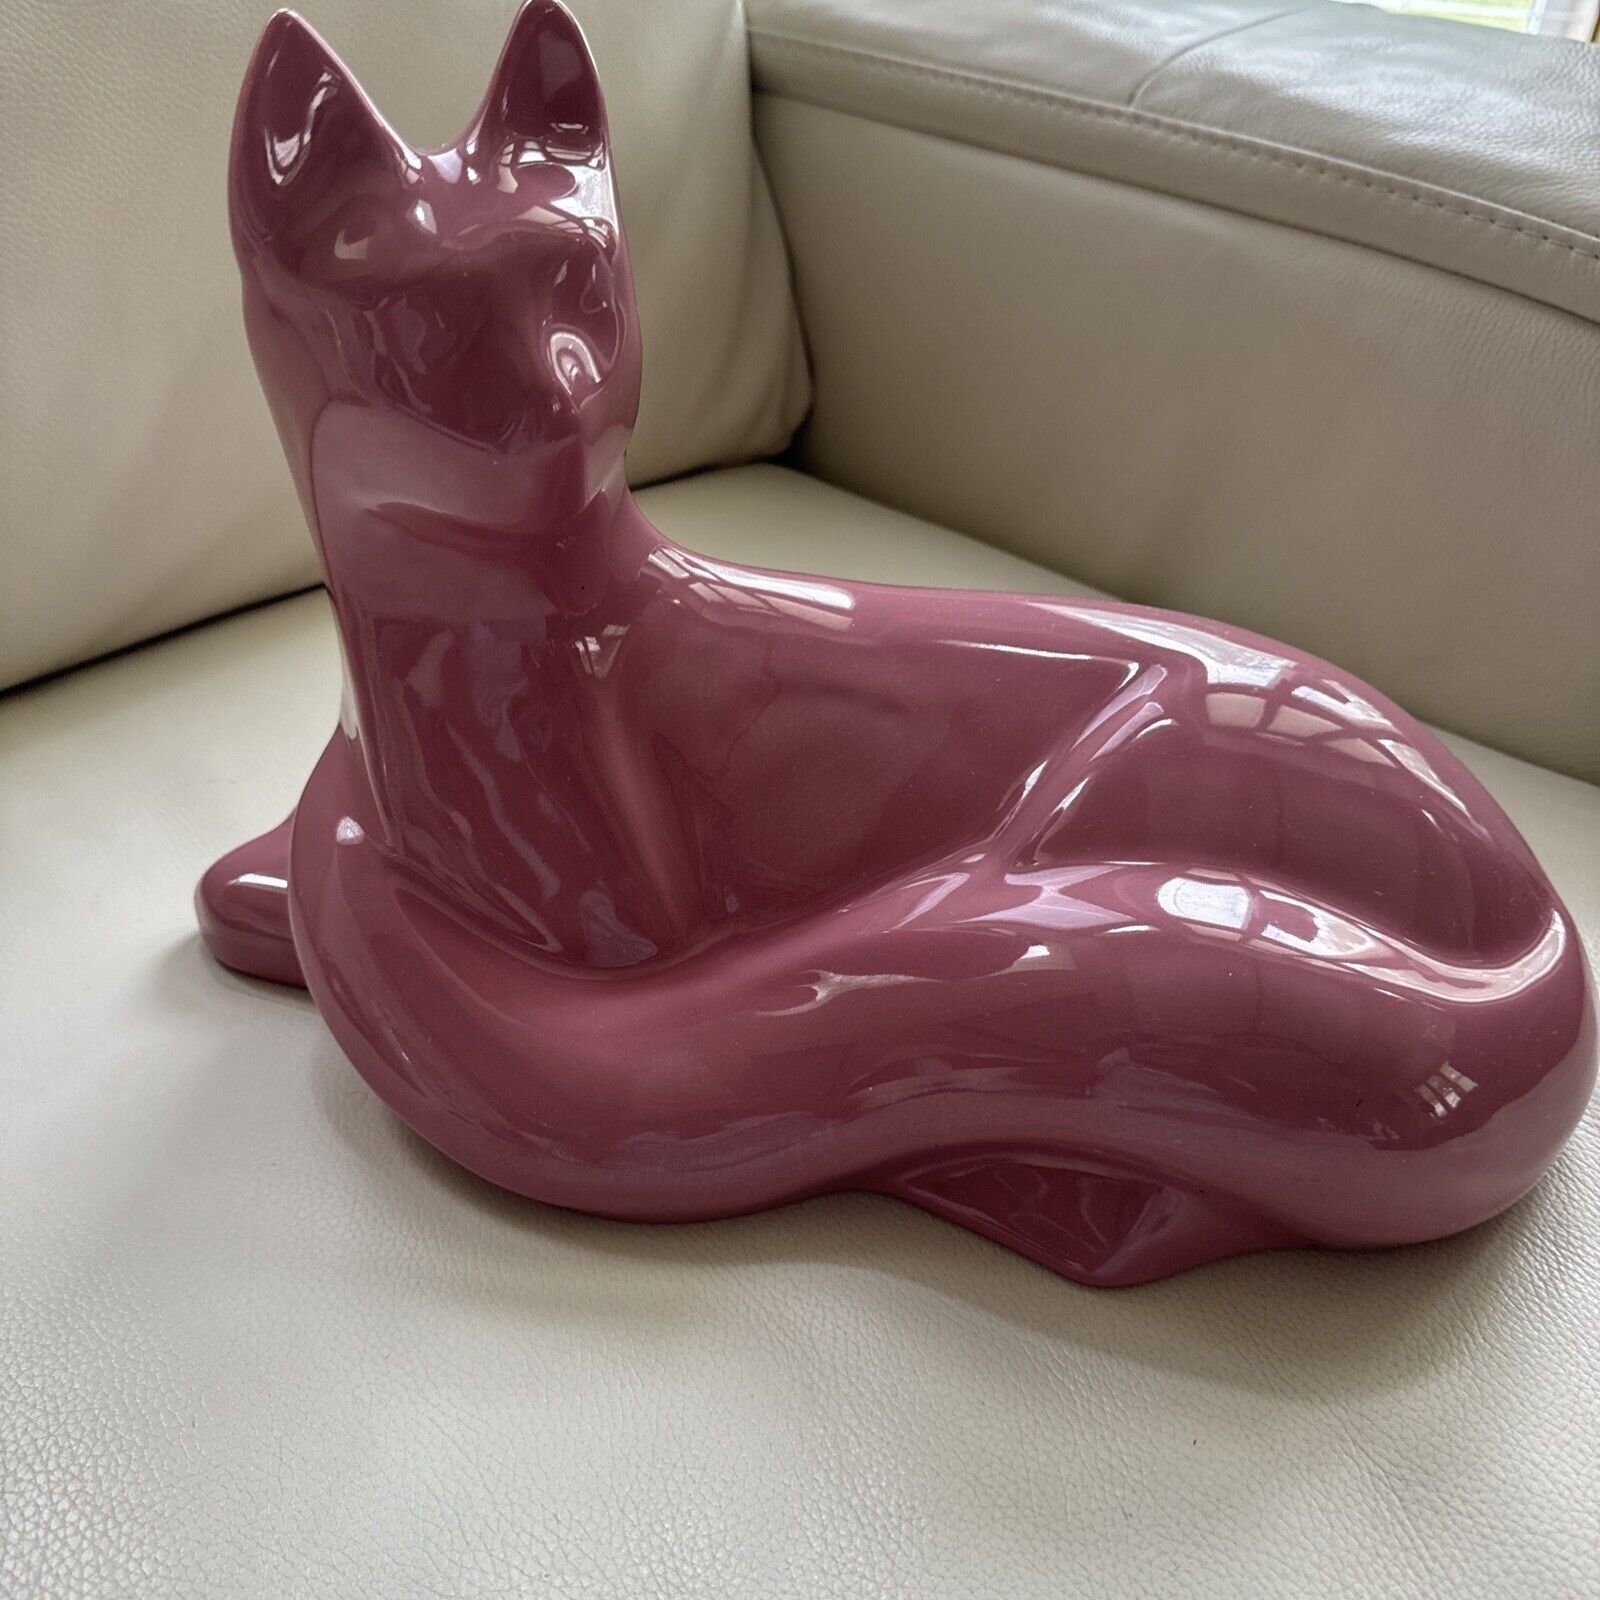 Vintage 80’s Royal Haeger Pottery Ceramic Pink/Mauve Cat MCM Mid Century Modern